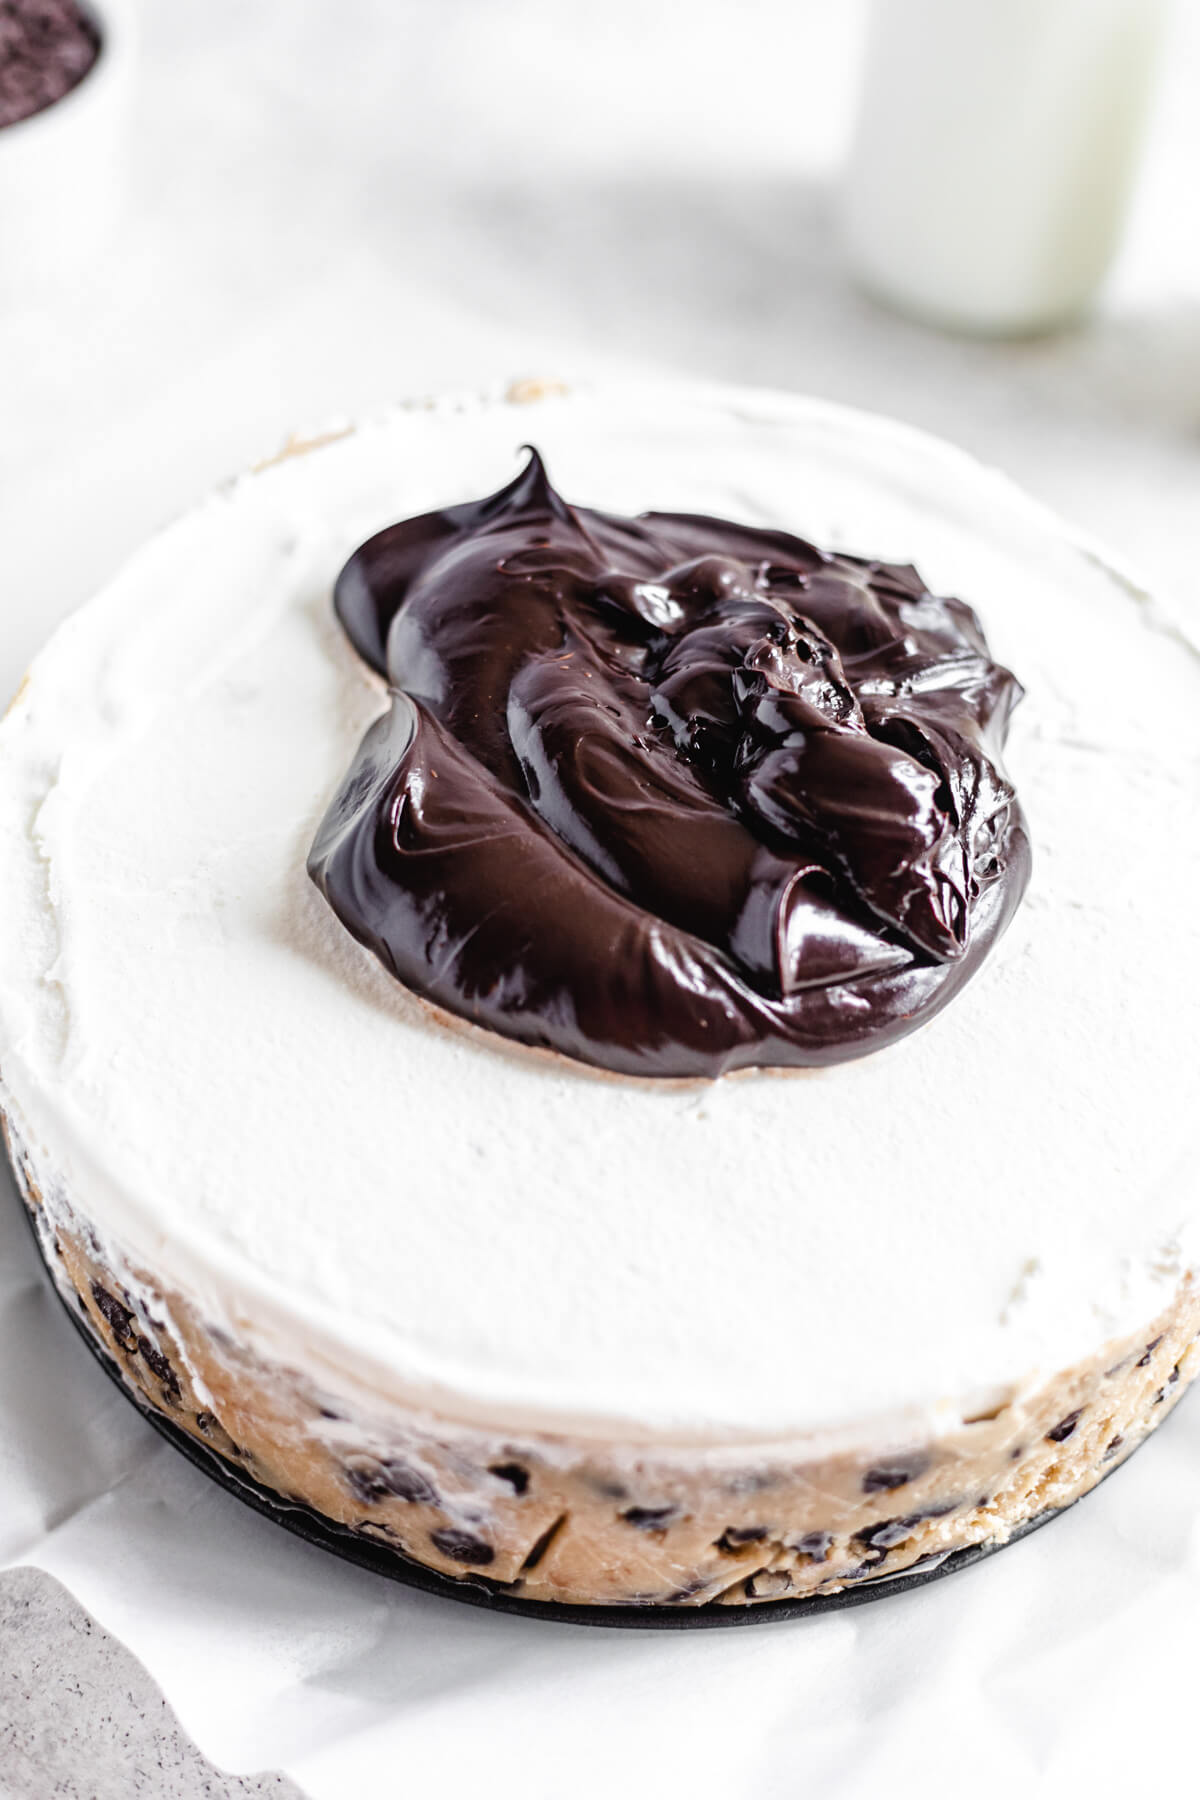 chocolate ganache on top of ice cream cake